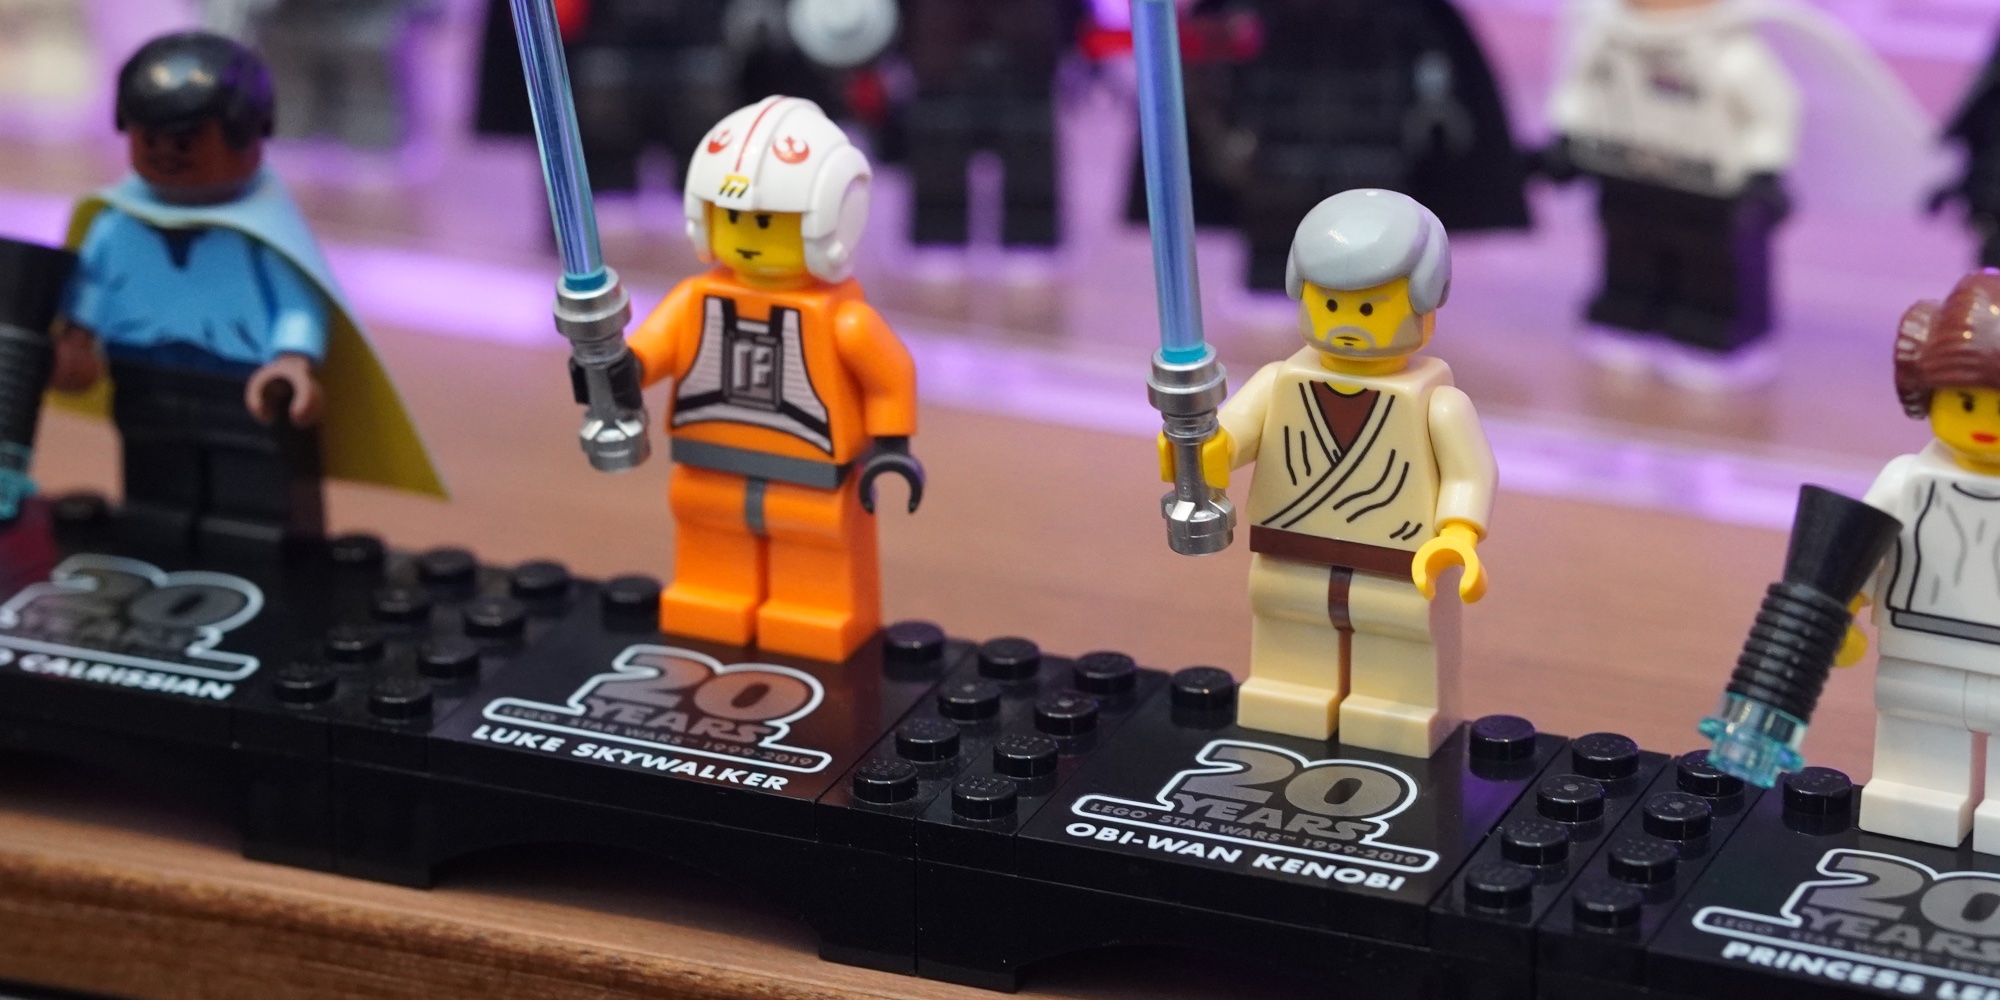 LEGO Star Wars 25th anniversary set details